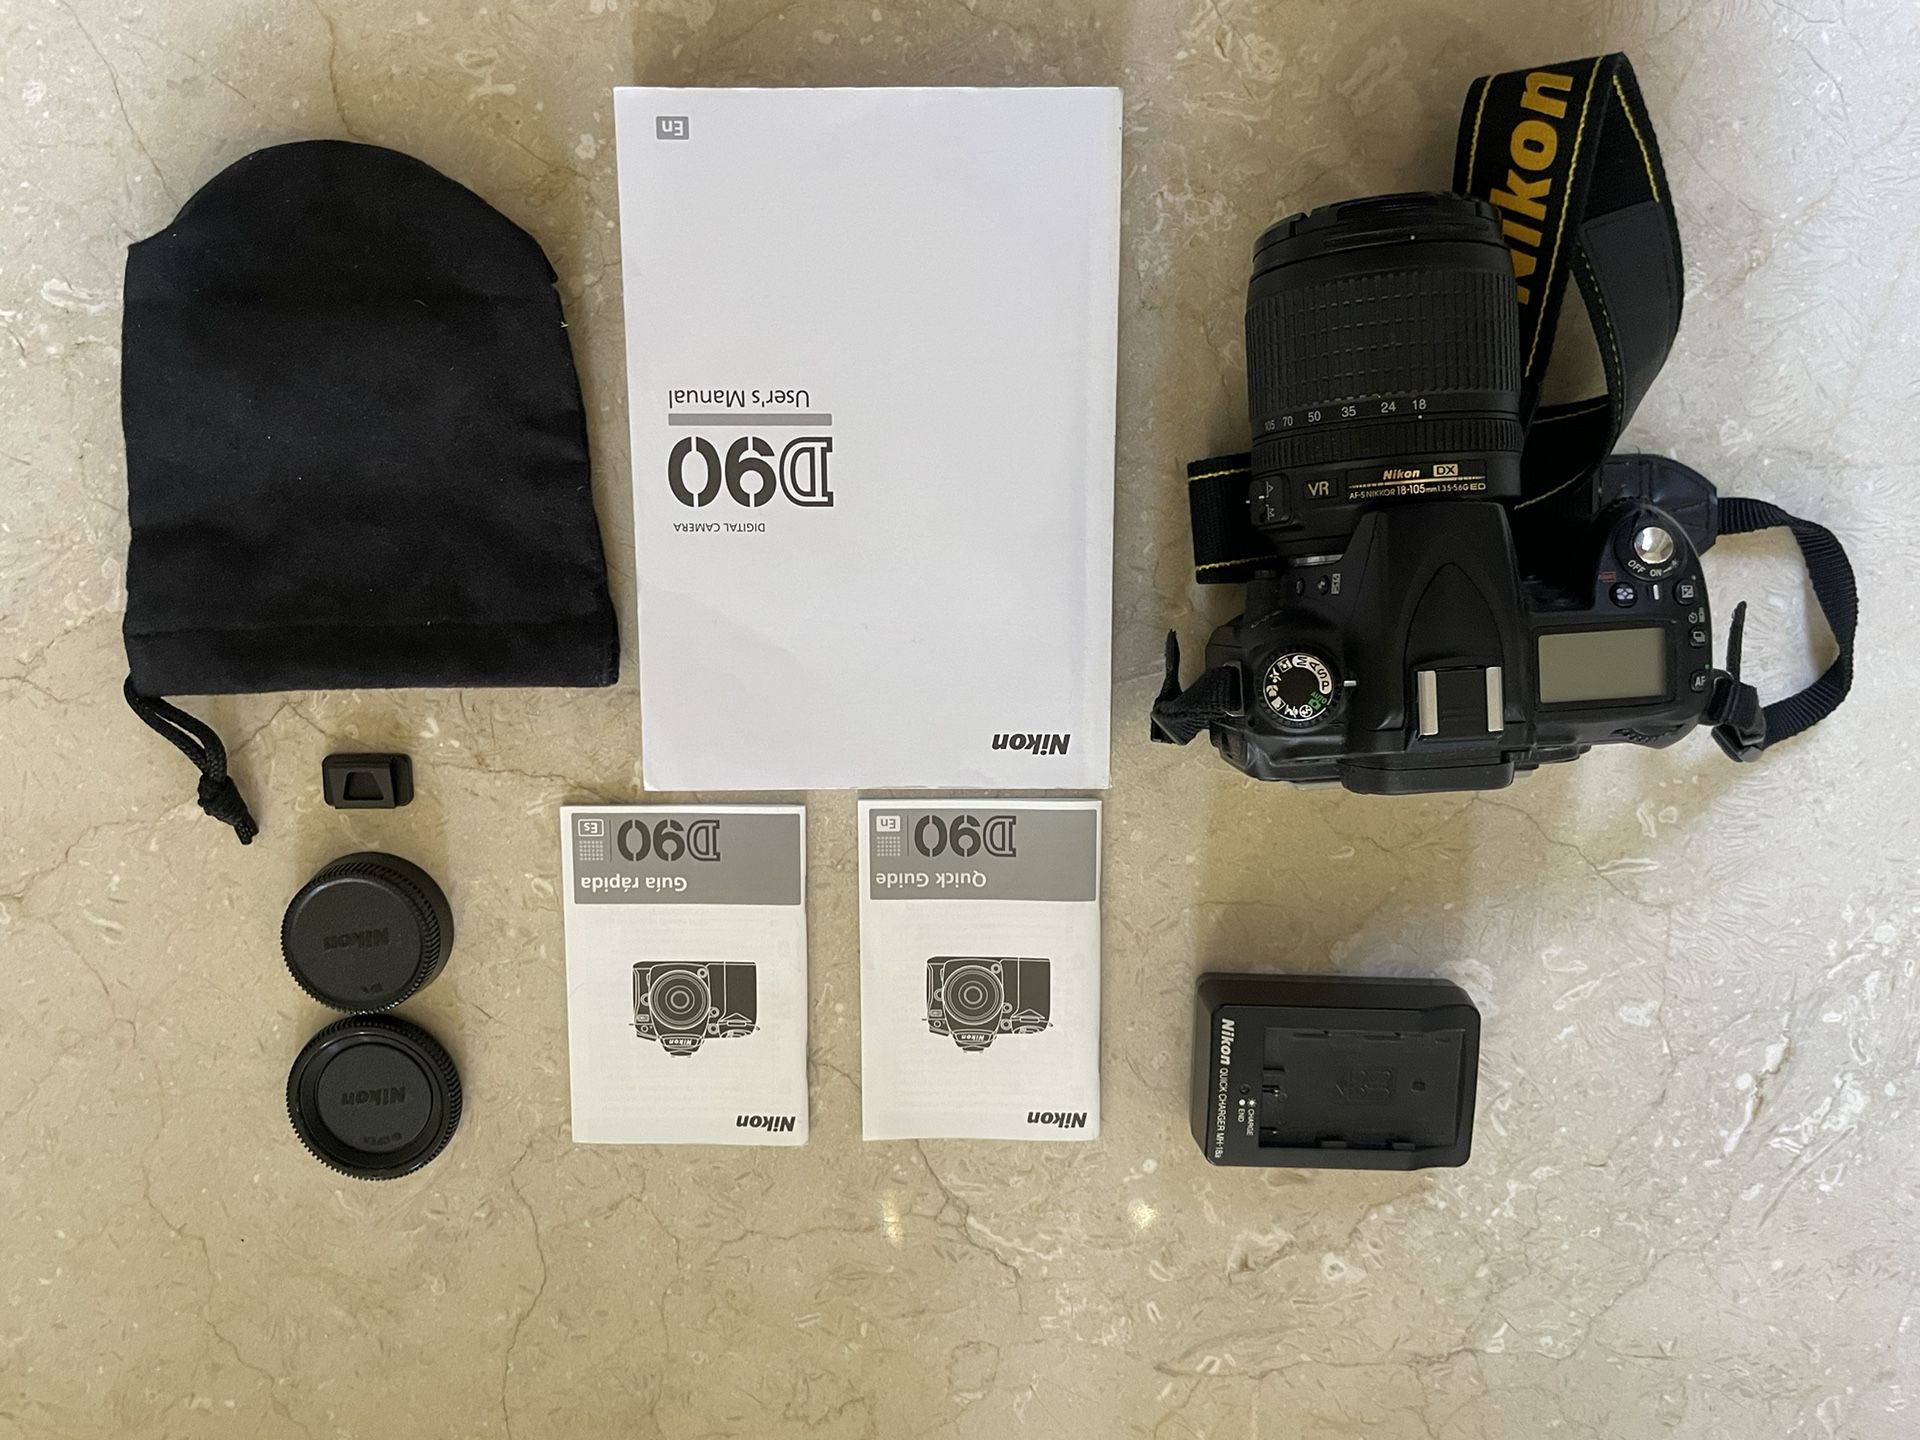 Nikon D90 DSLR Camera with Incase Camera Bag